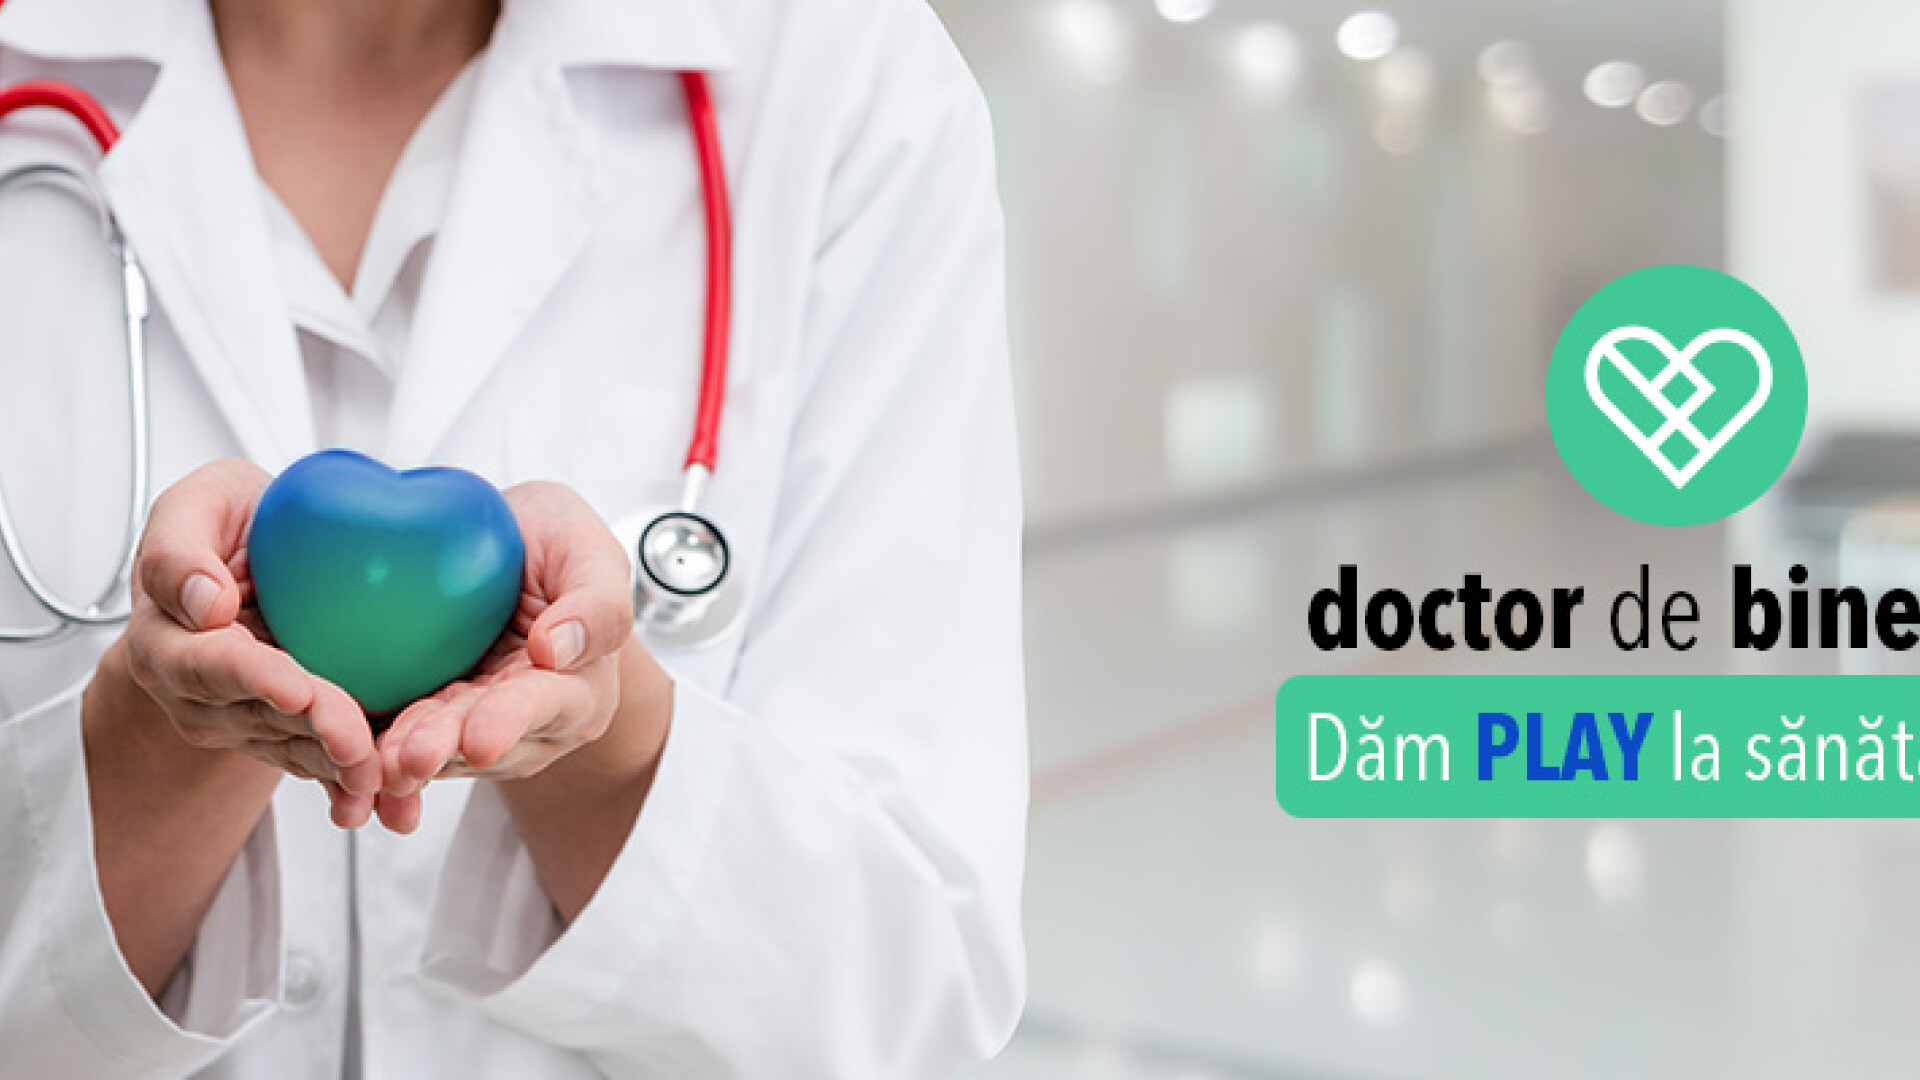 PRO TV lansează site-ul DoctorDeBine.ro